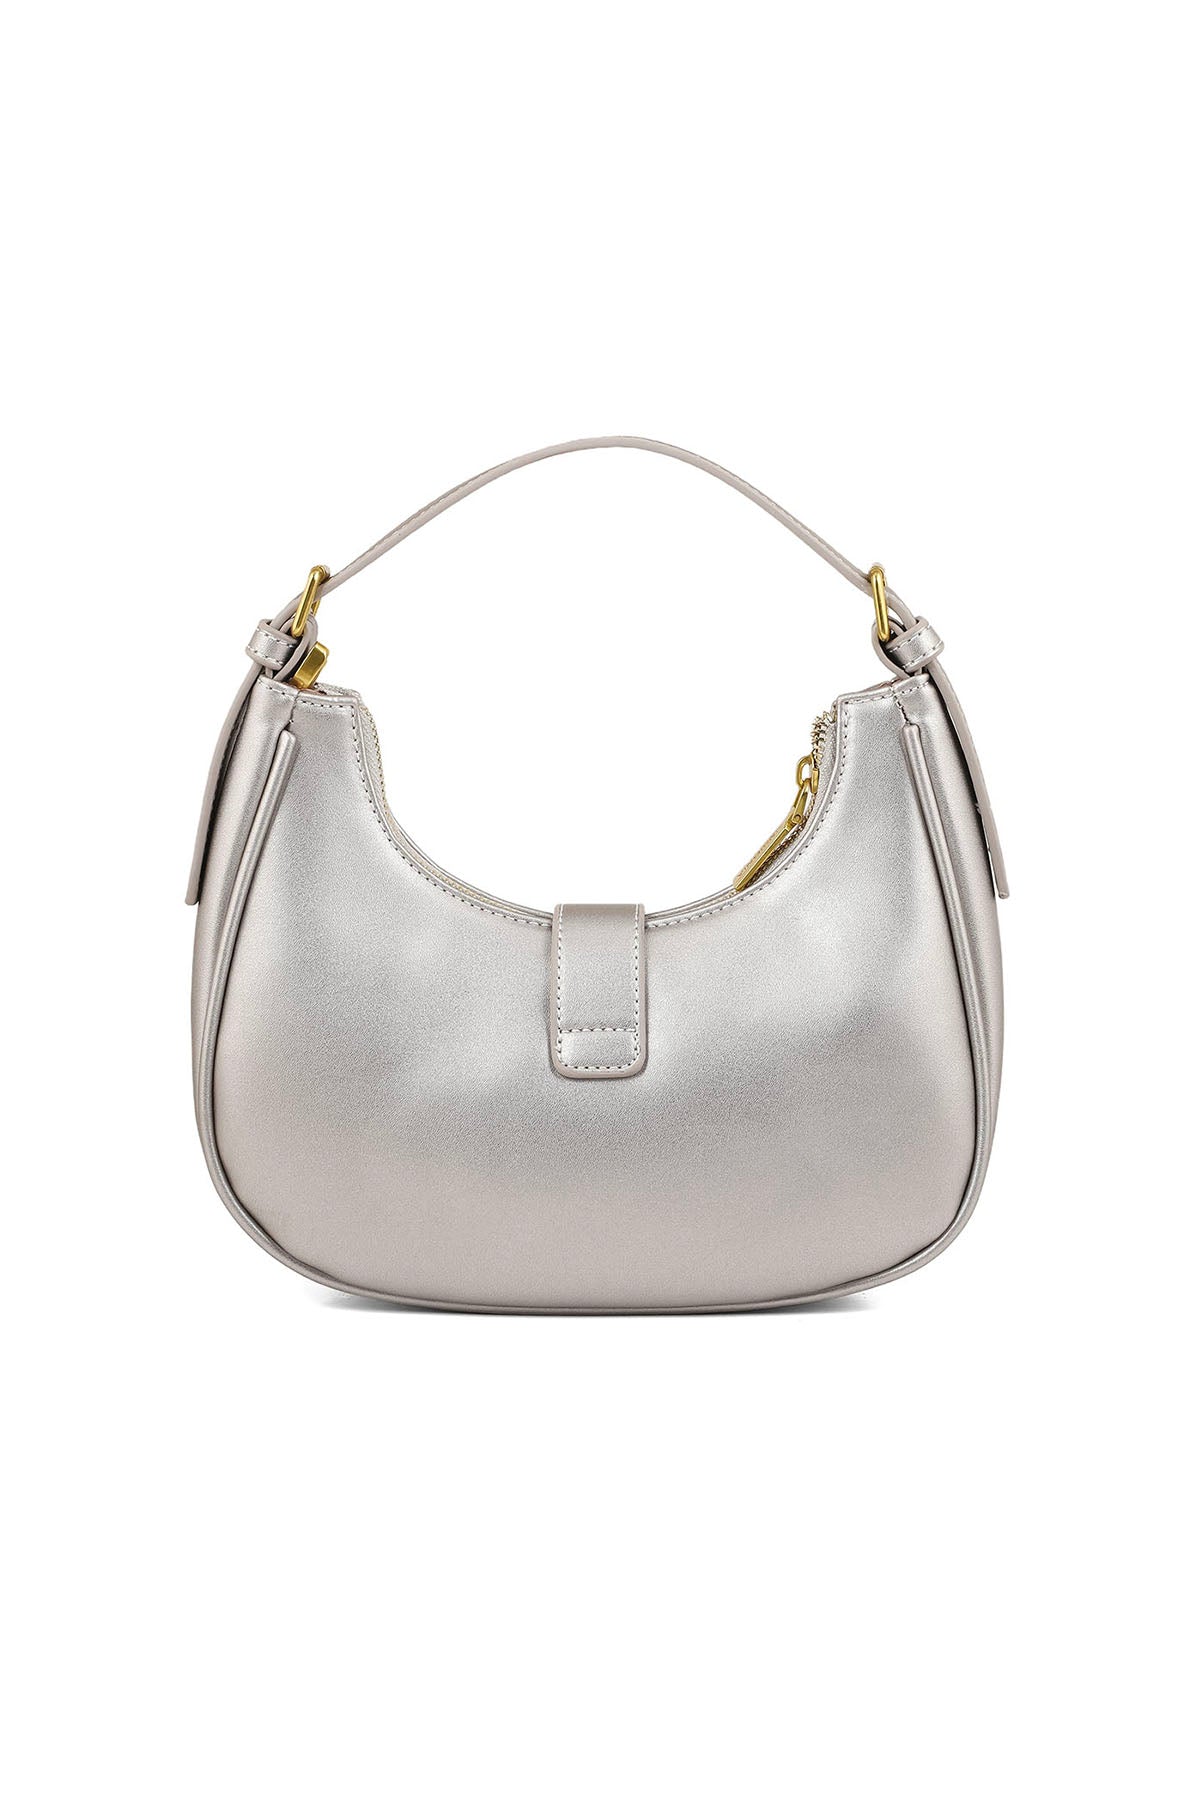 Hobo Hand Bags B15089-Silver